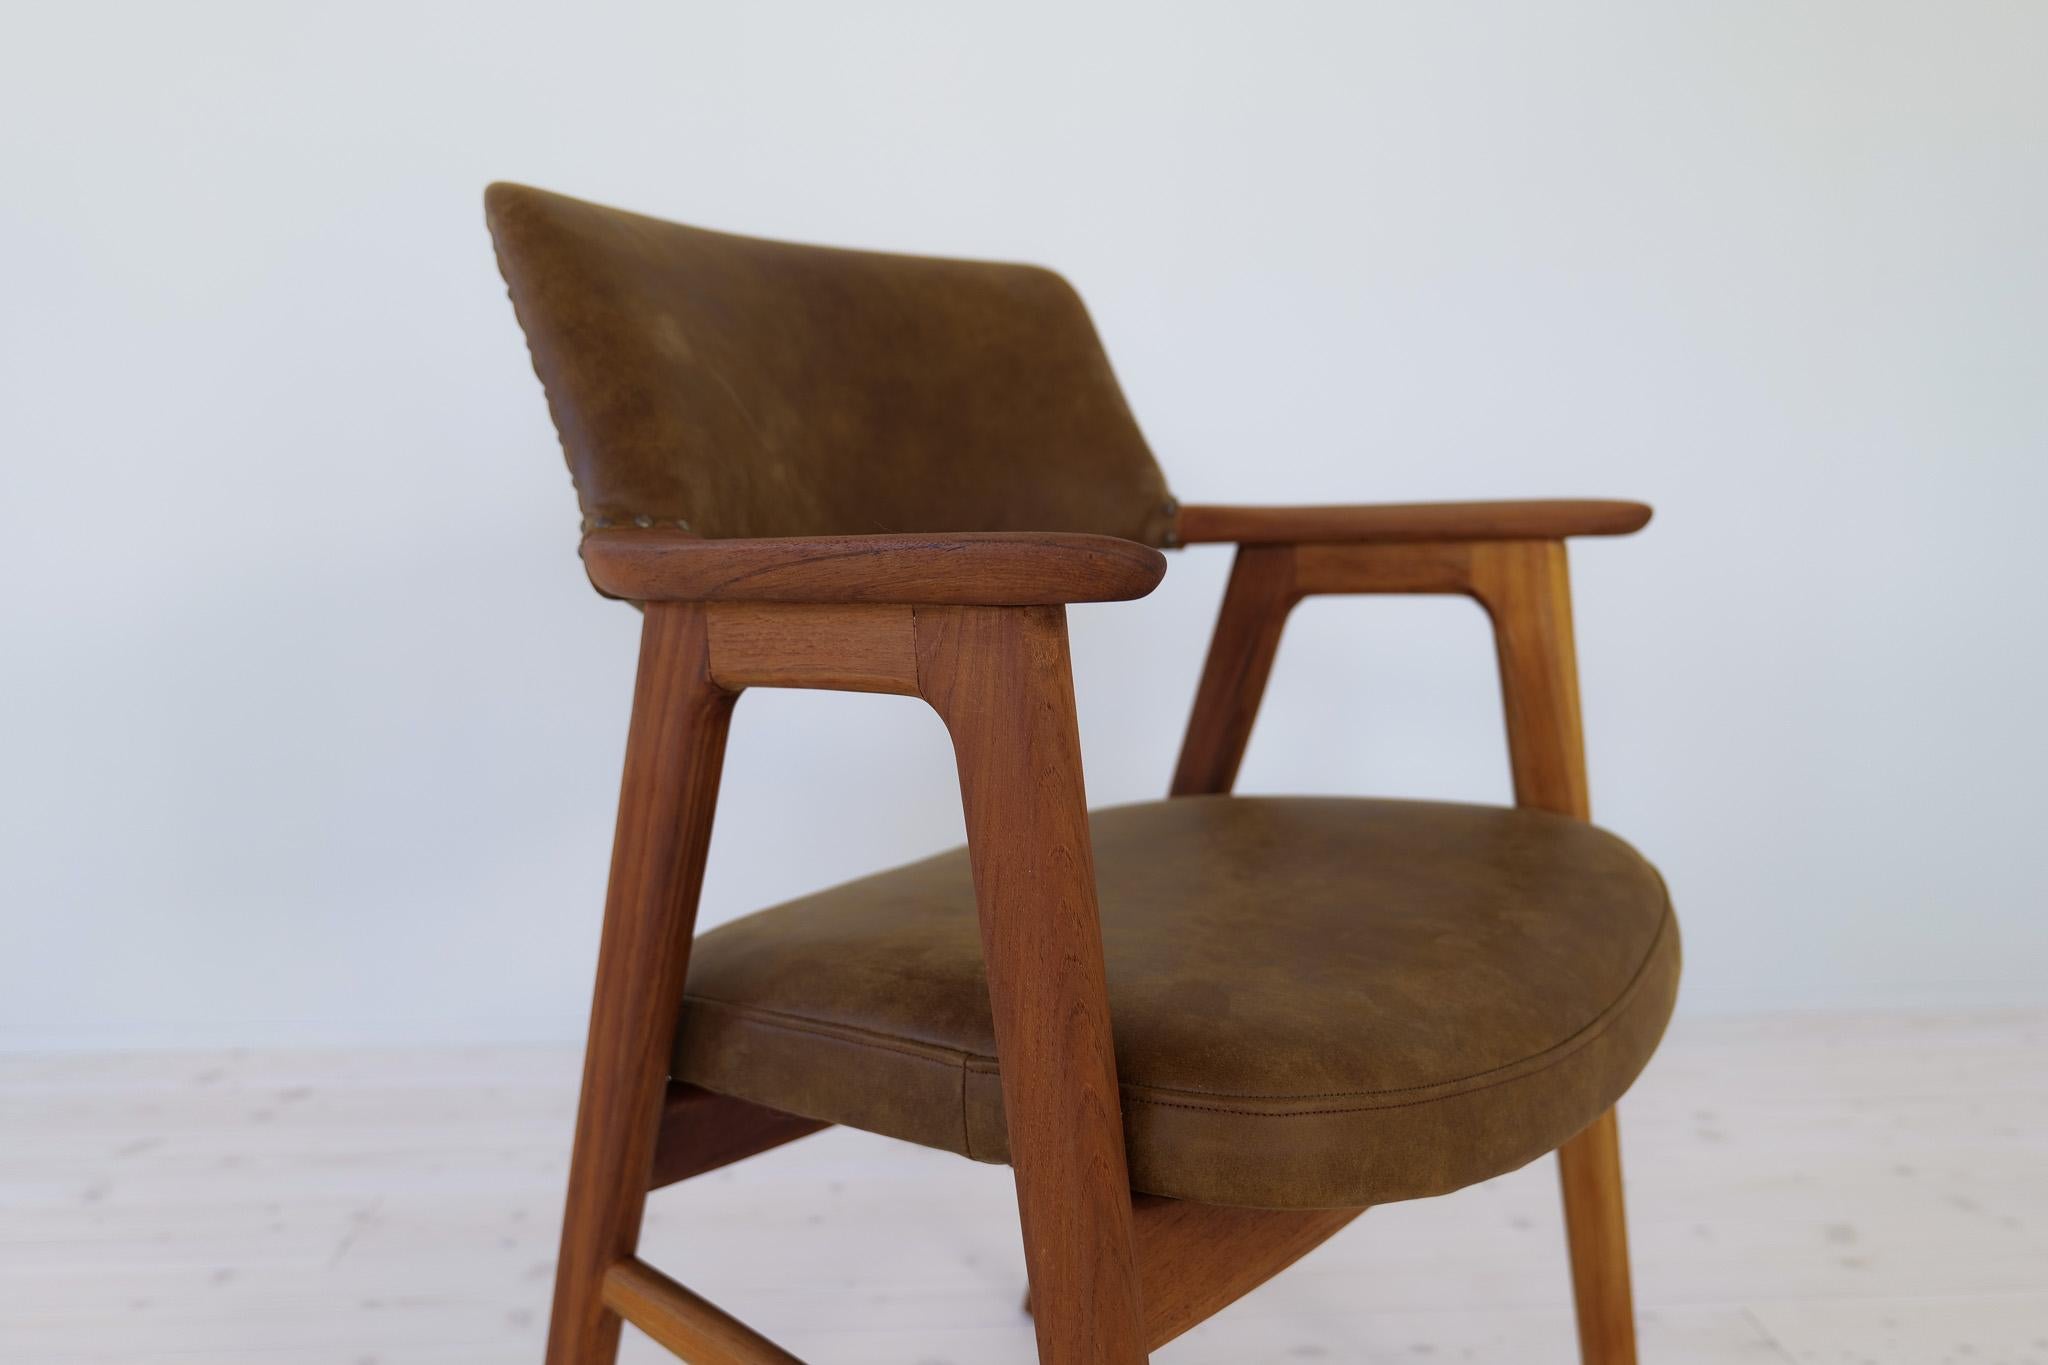 Midcentury Modern Erik Kirkegaard Danish Teak and Leather Desk Chairs, 1960s For Sale 8